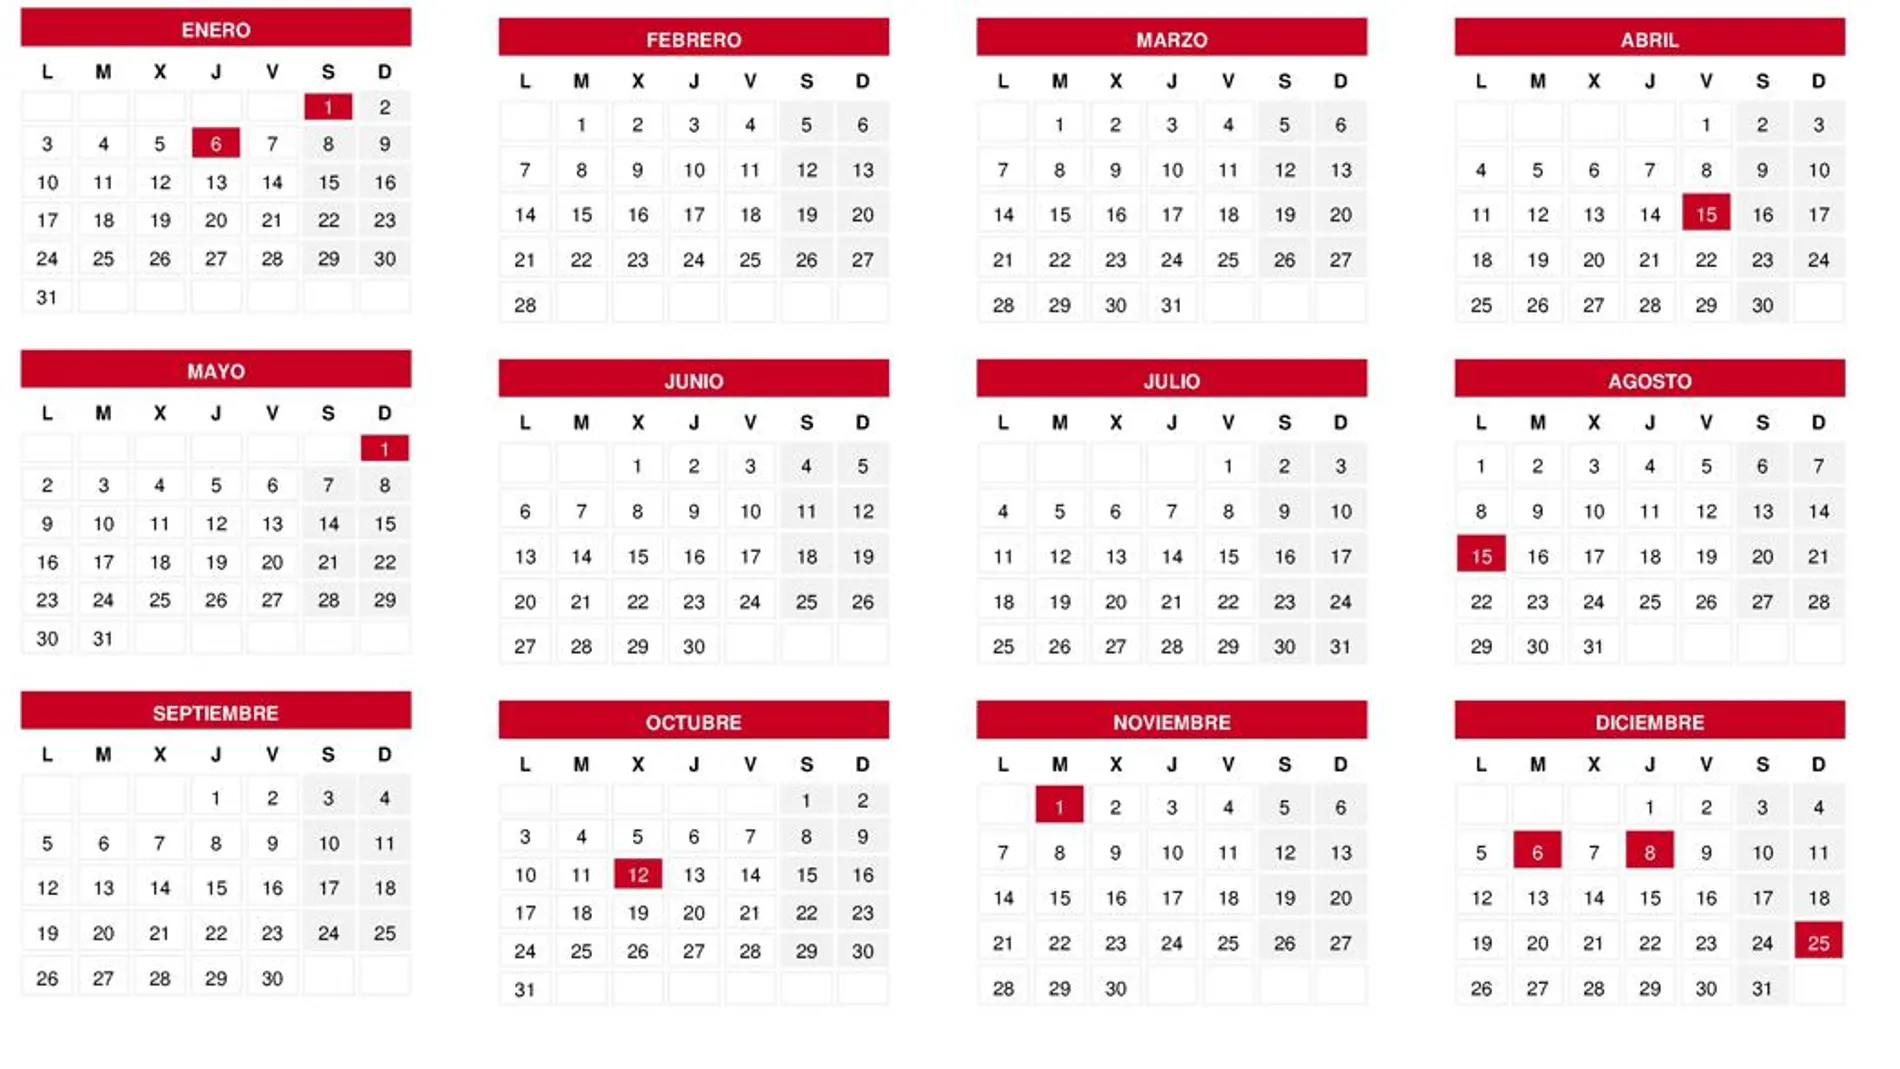 Calendario laboral con los días festivos a nivel nacional